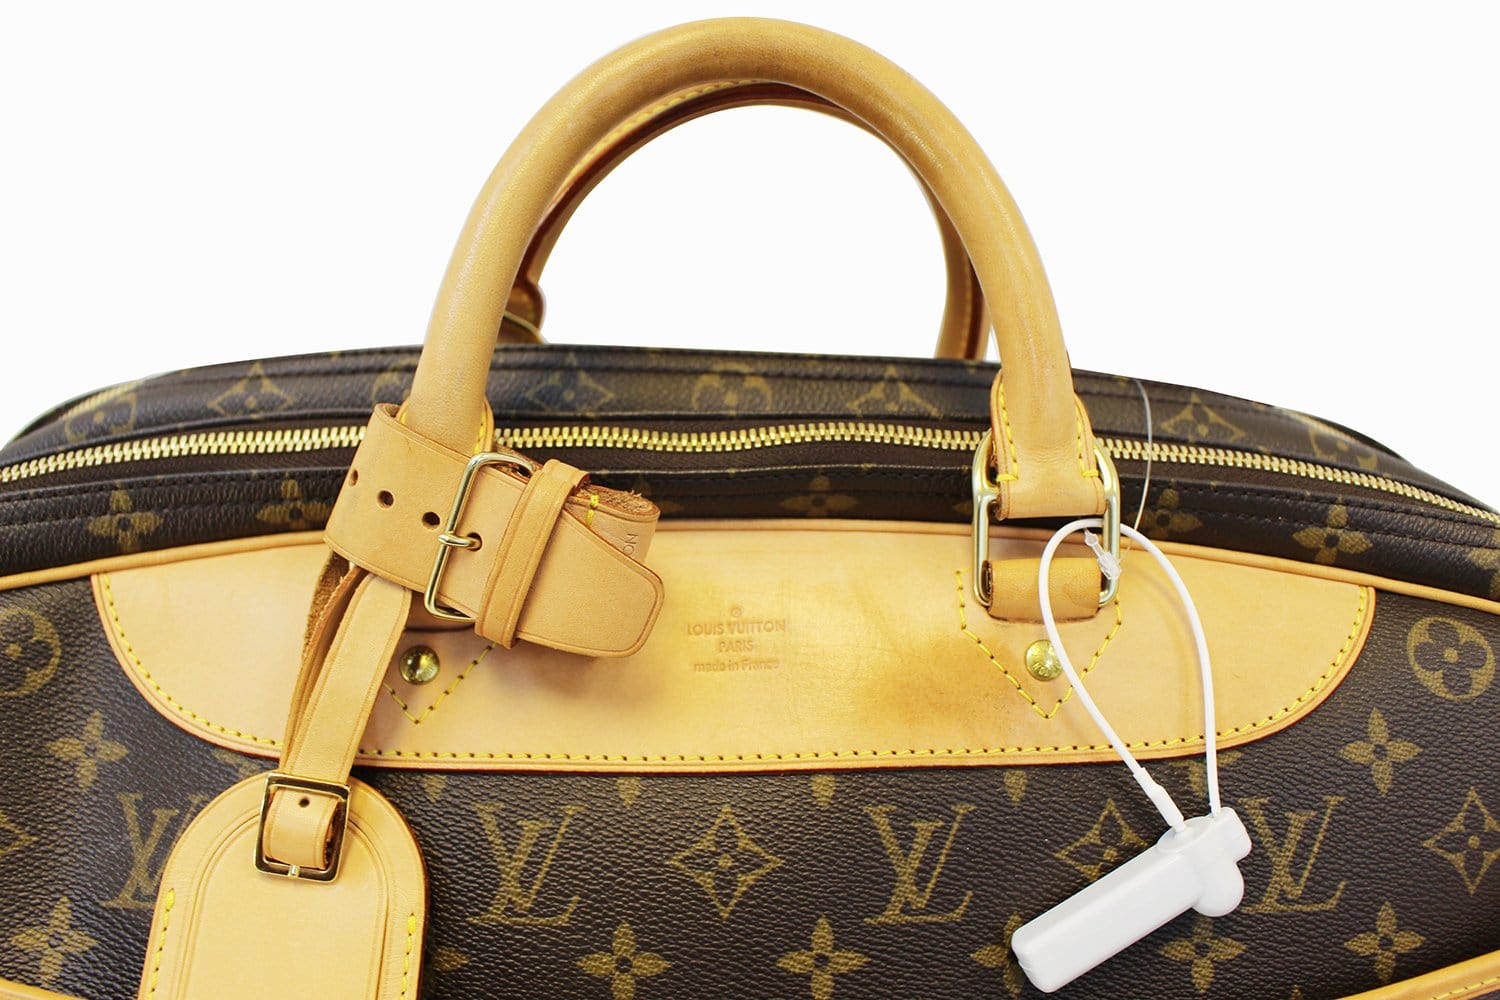 M64692 – dct - ep_vintage luxury Store - Bolsa de viaje Louis Vuitton Alize  en lona Monogram revestida marrón y cuero natural - Beige - Clip - A -  Louis - Billets - Vuitton - Money - Pince